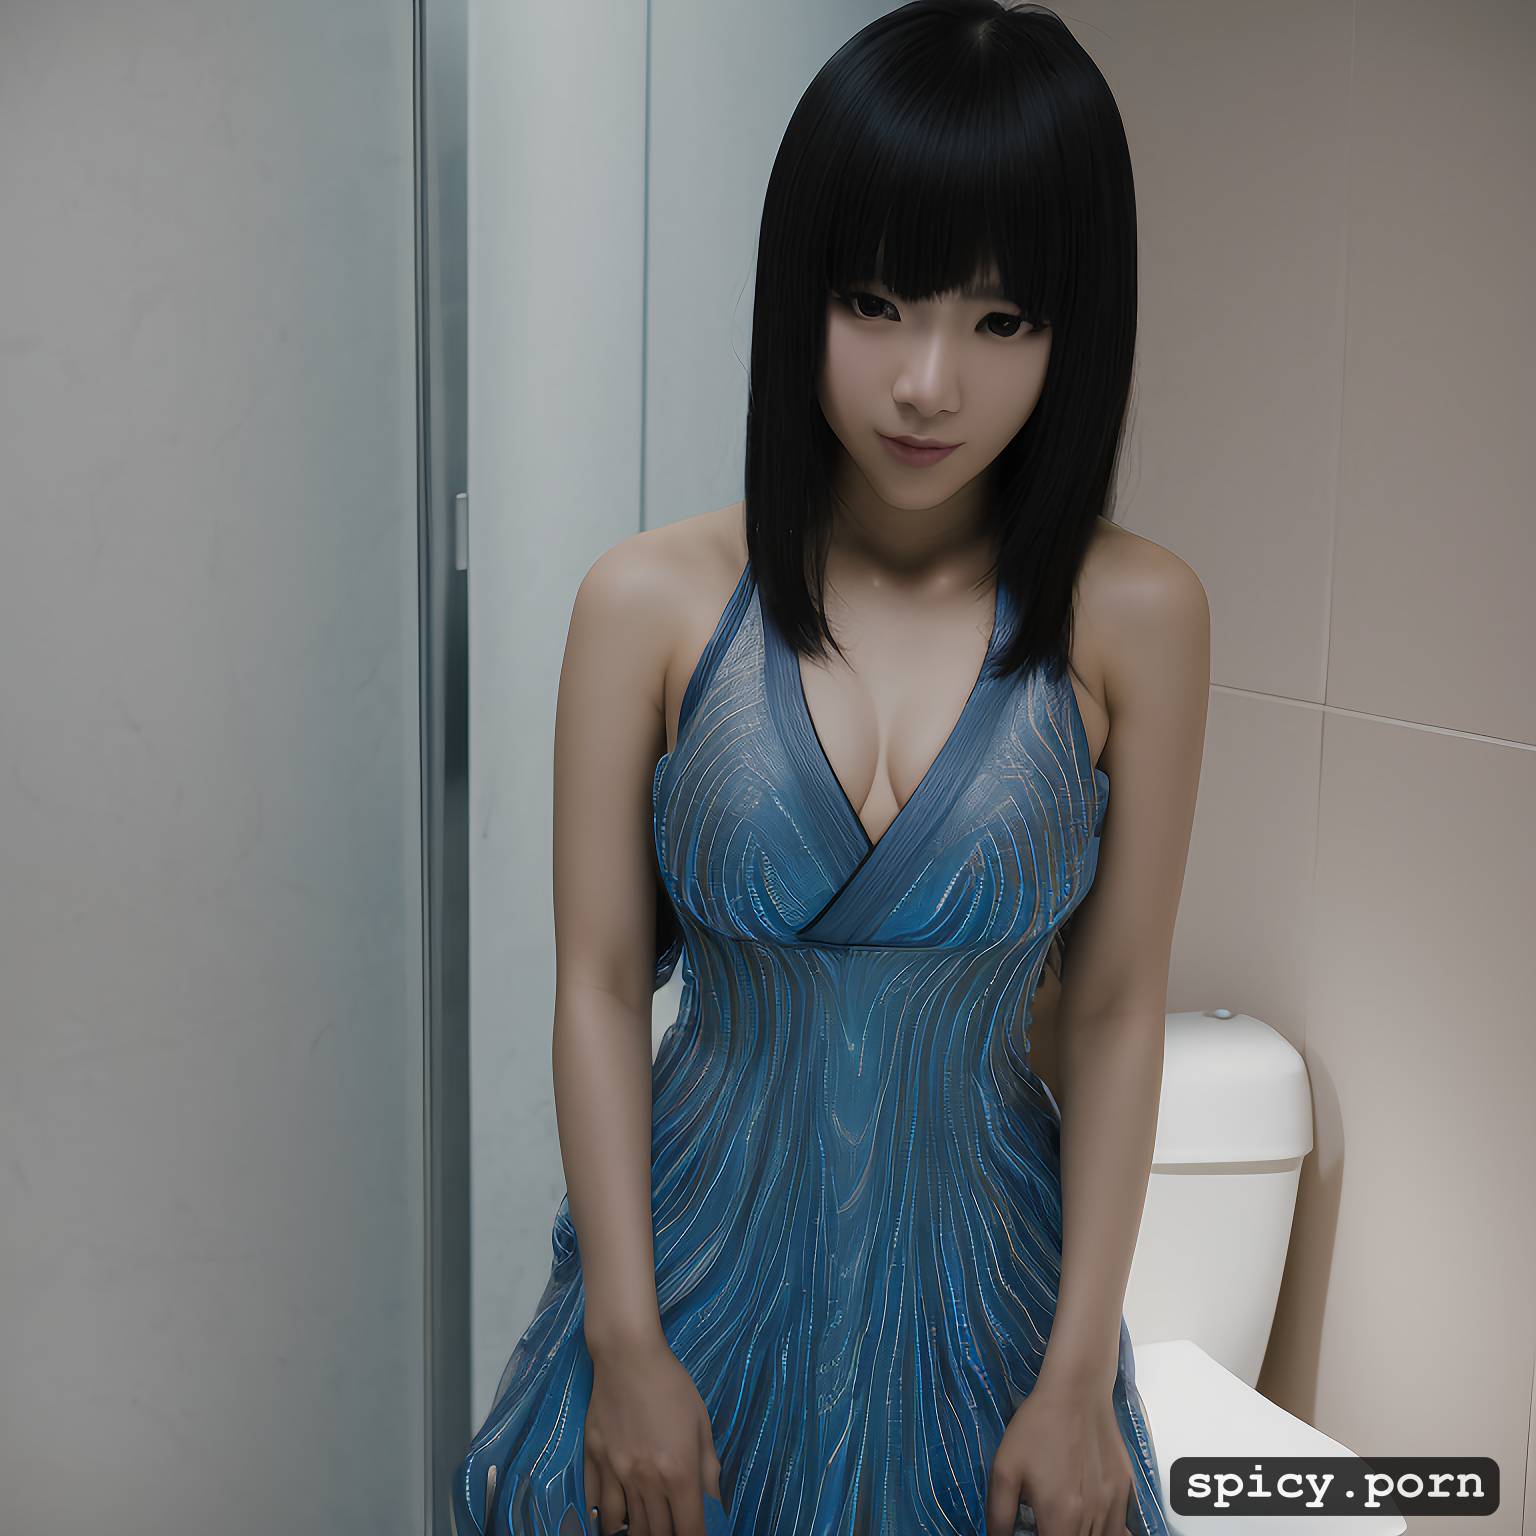 Woman Pov Porn Dressing - Image of japanese female, pov, semi transparent dress, ultra realistic -  spicy.porn